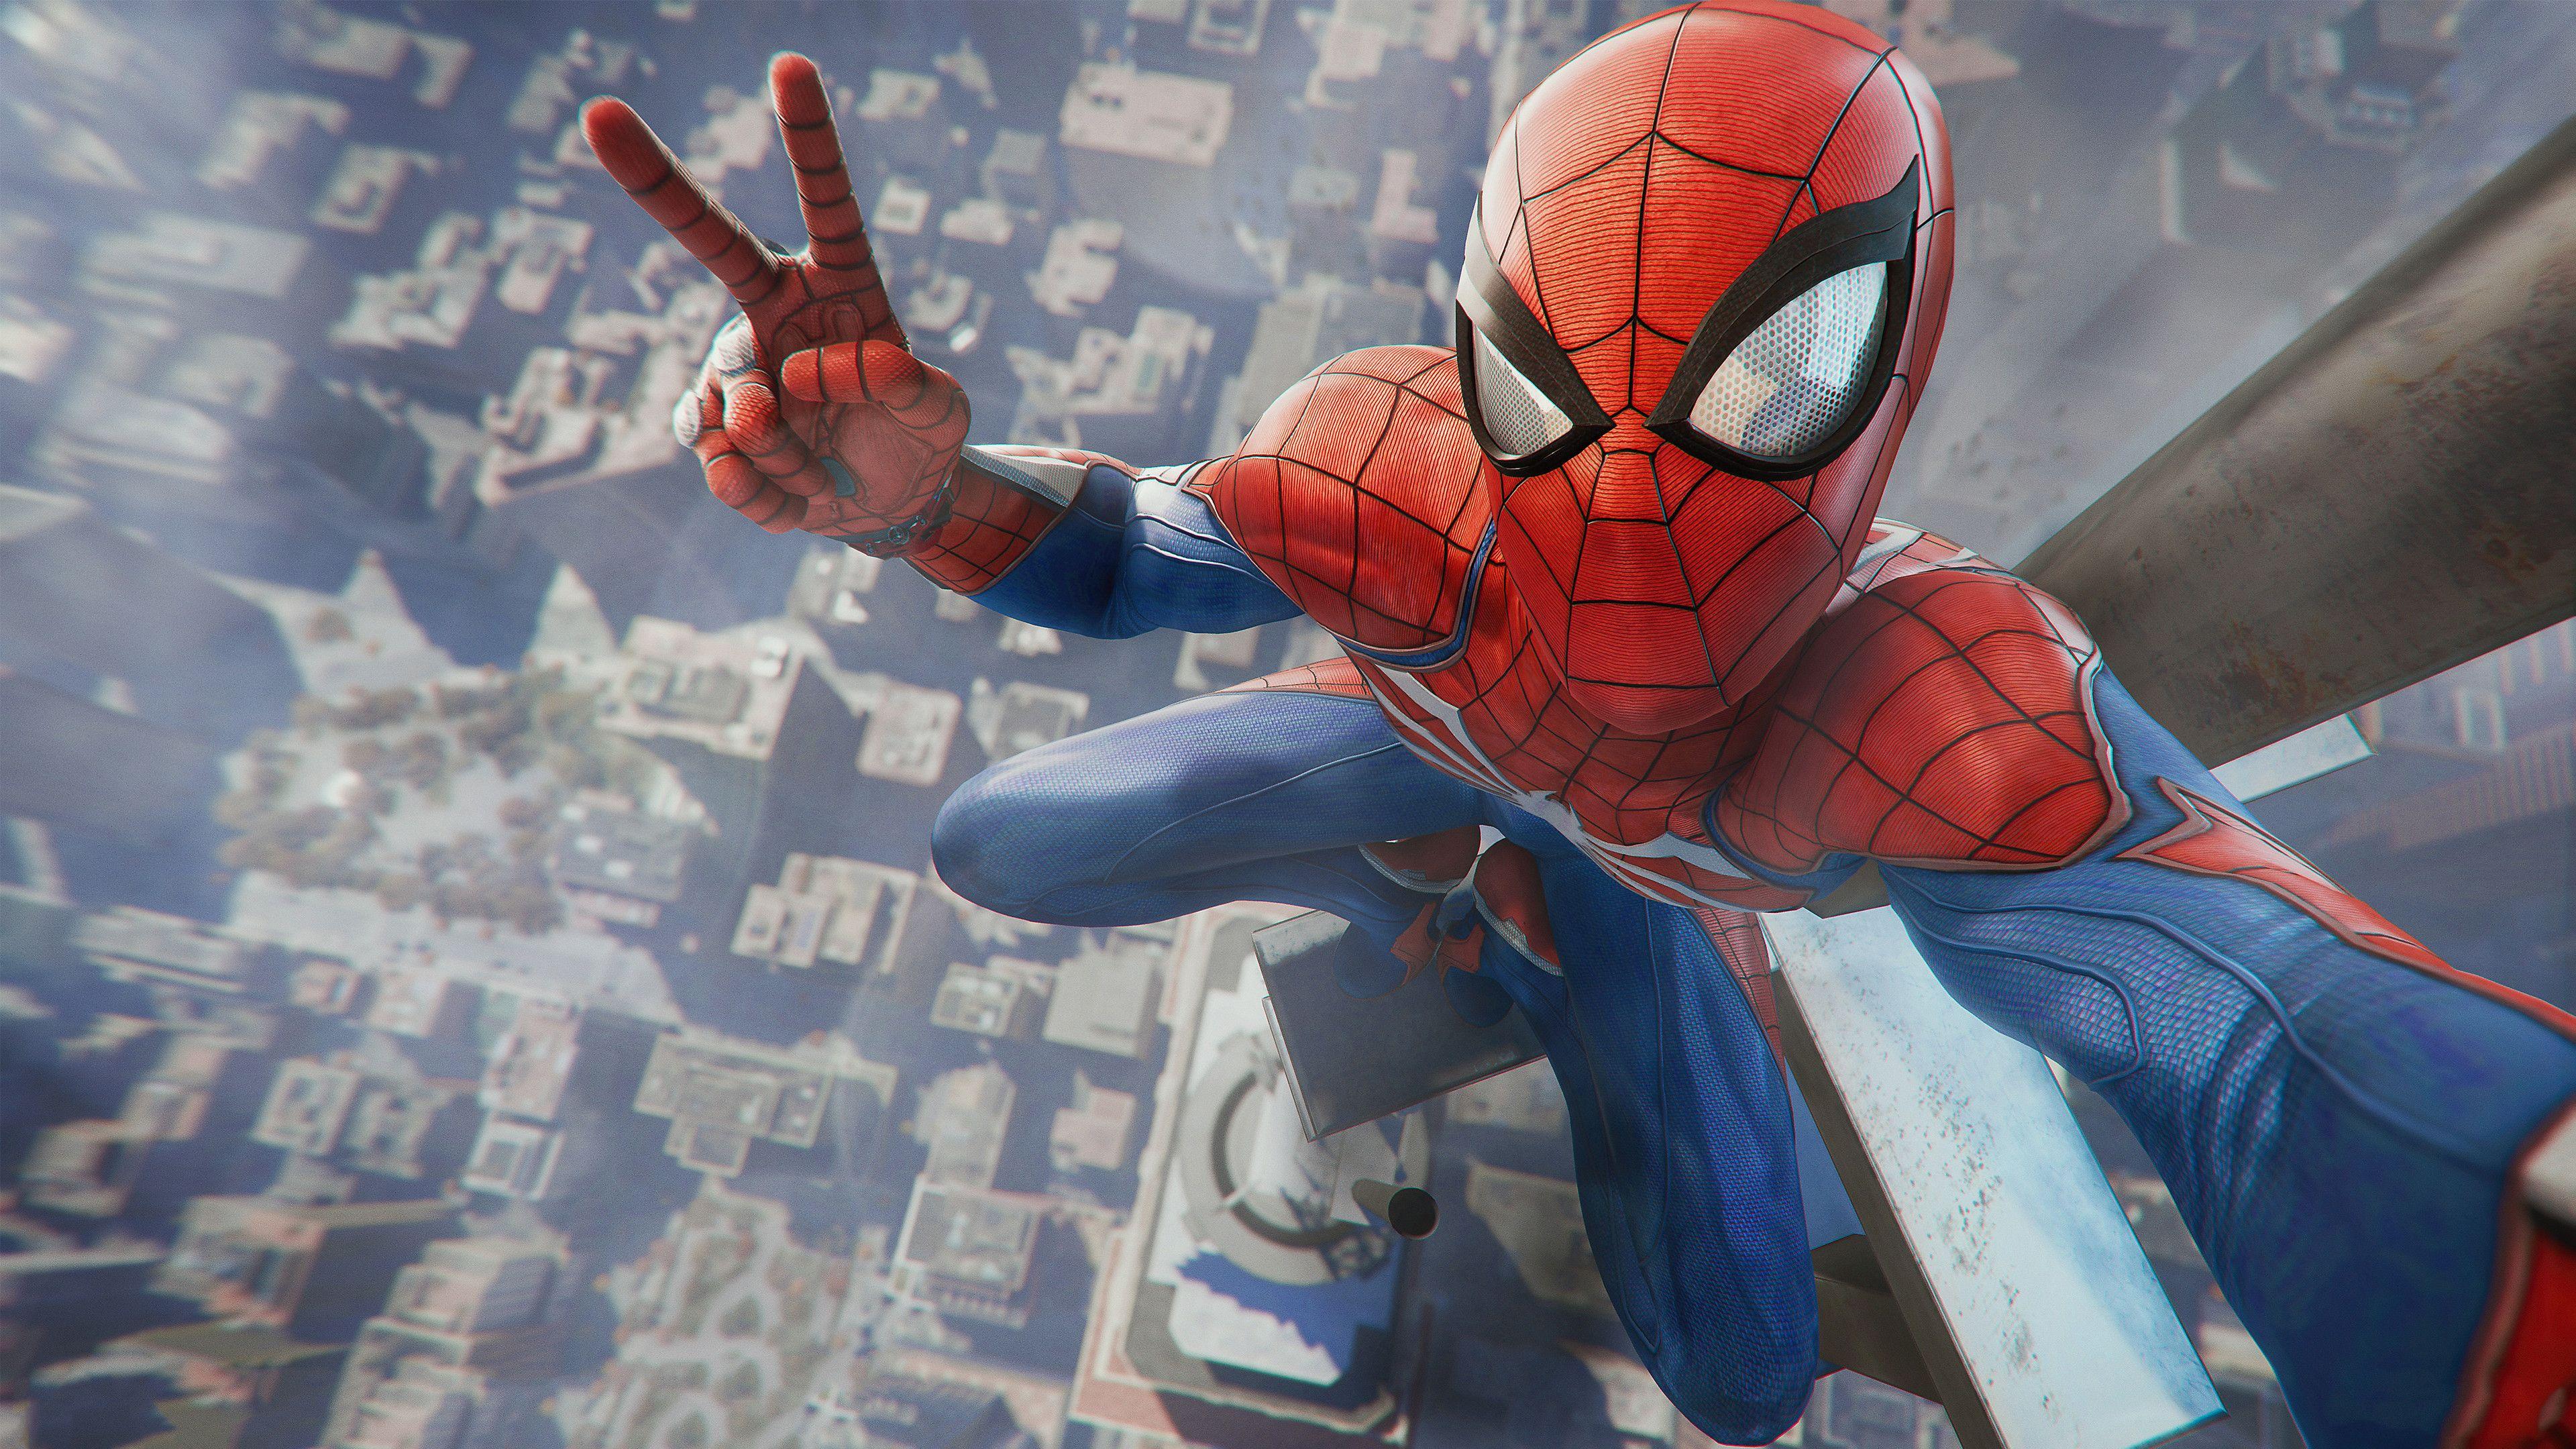 Spiderman 4K Wallpapers - Top Free Spiderman 4K Backgrounds ...